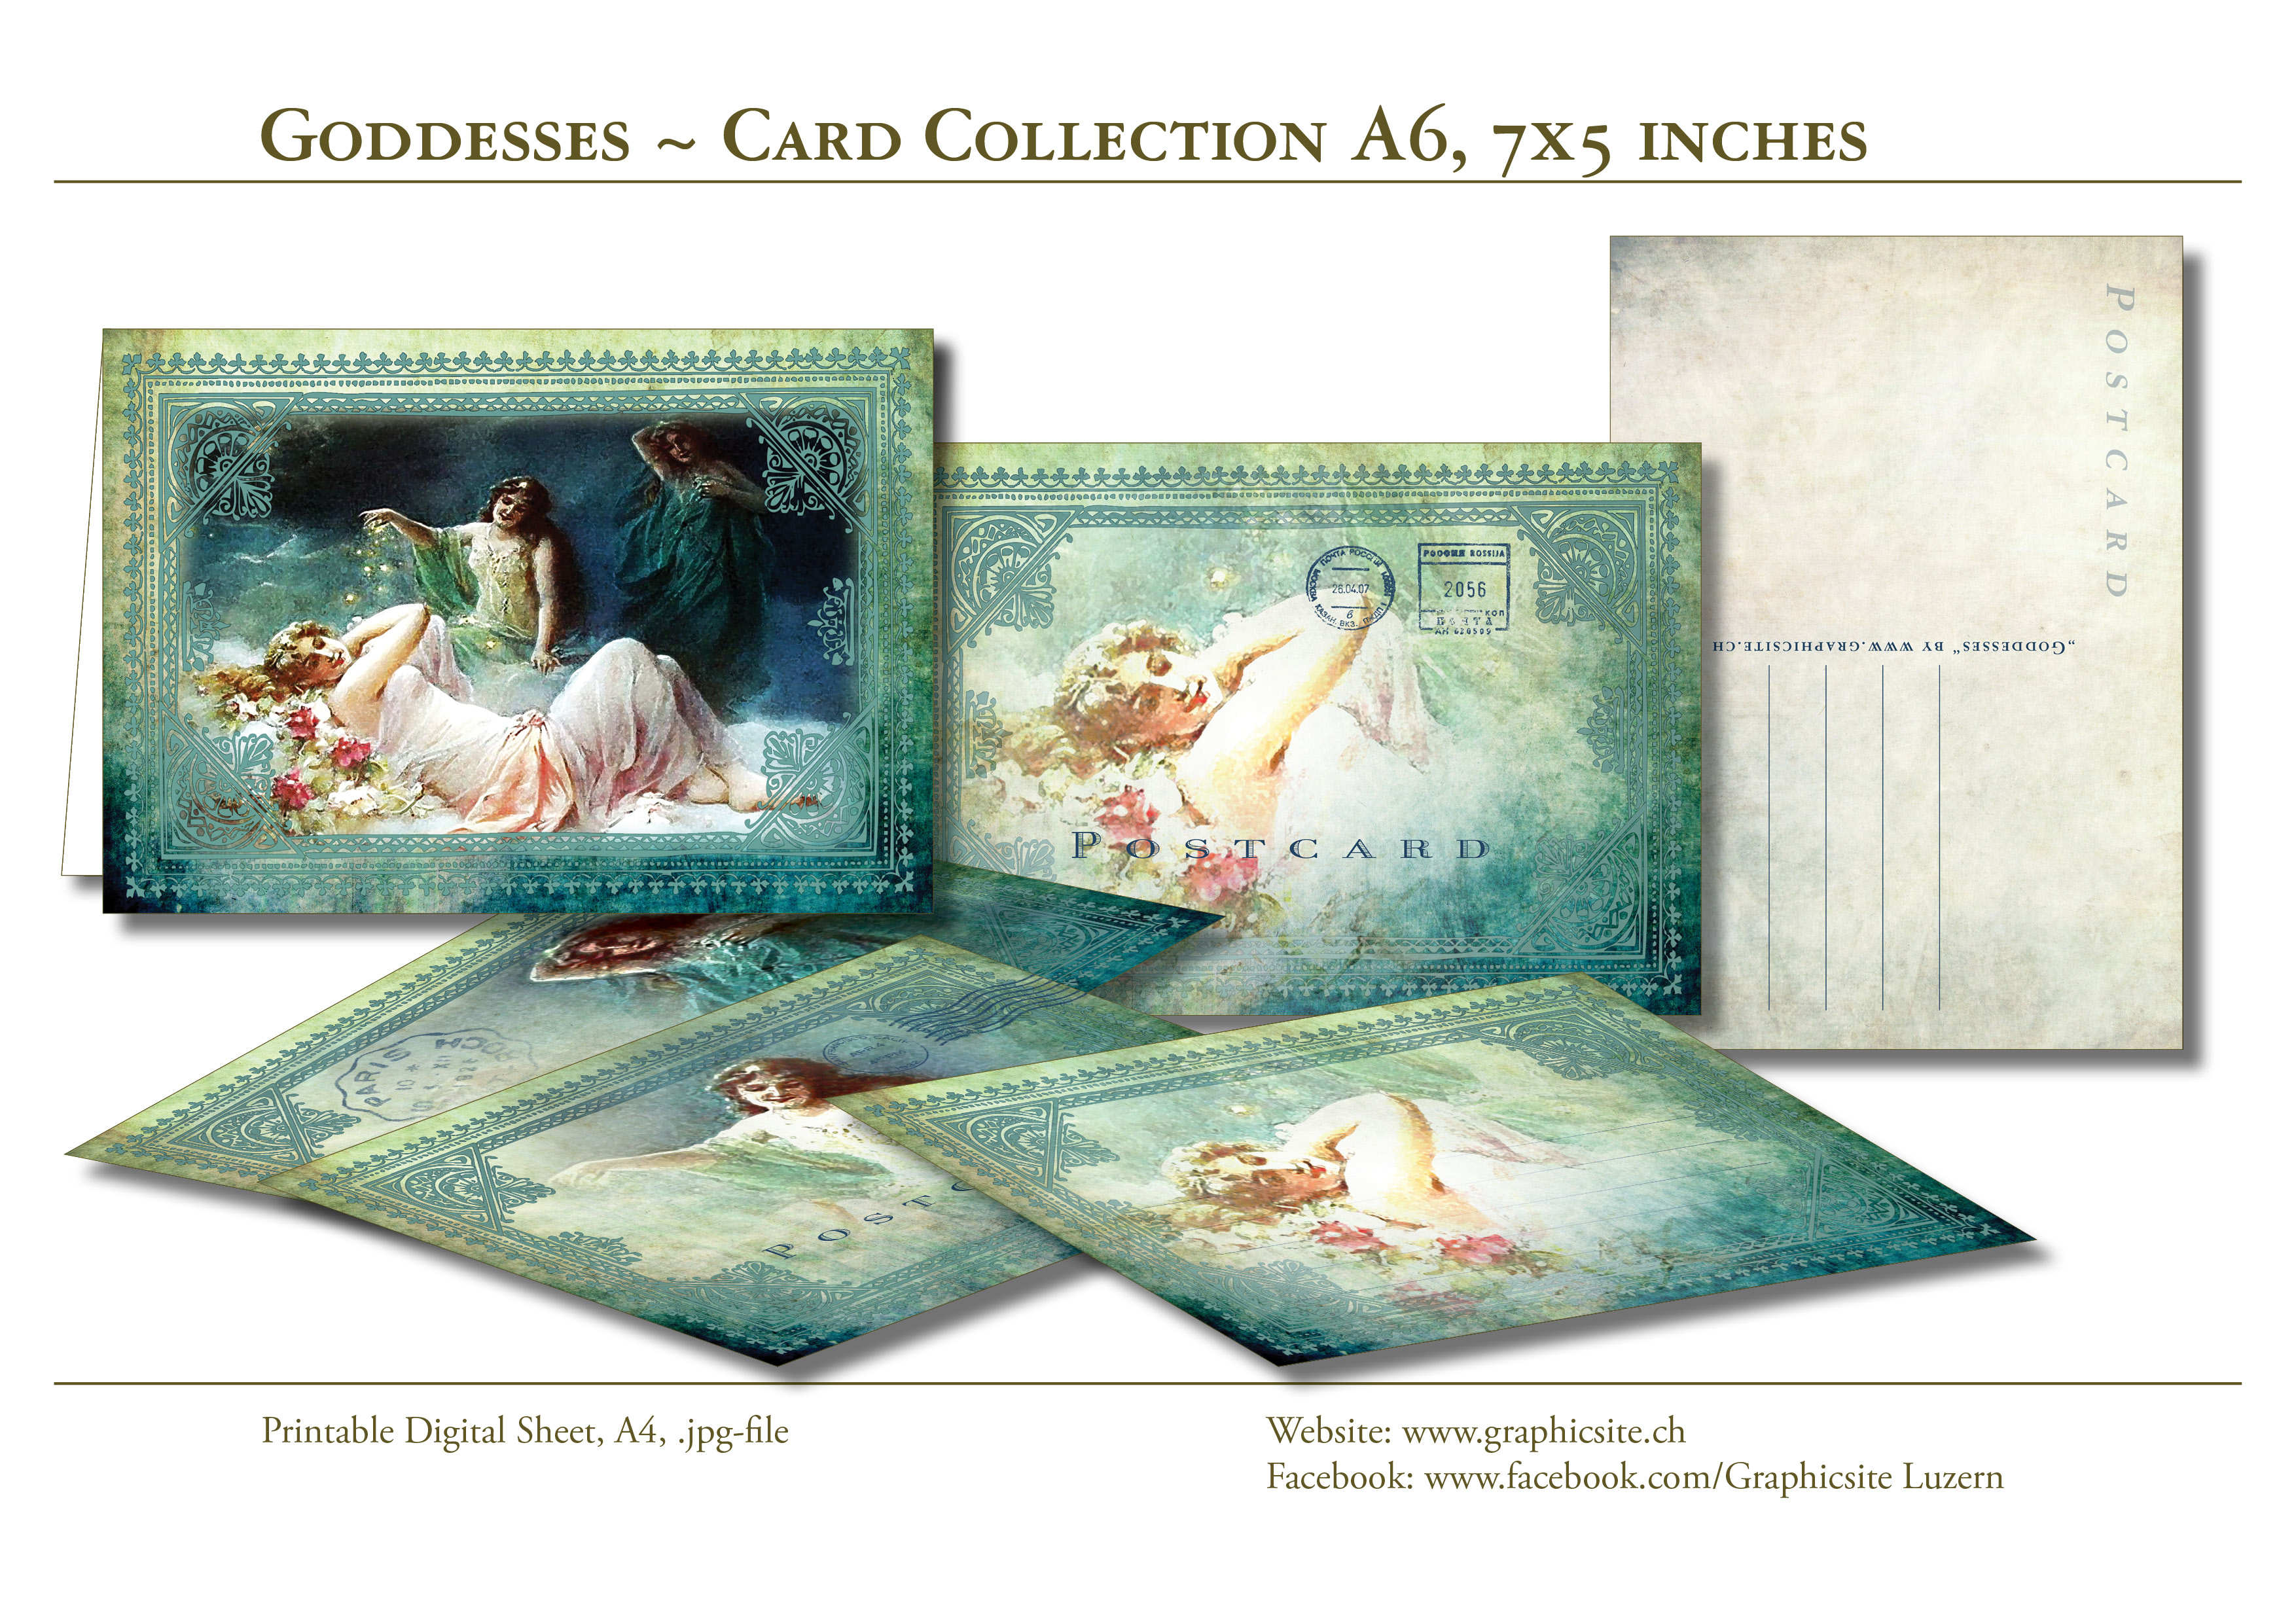 Printable Digital Sheets - Card Collection A6 - Goddesses - Vintage, Ornamental, Greeting Cards, Postcards, Envelop, Graphic Design Luzern, 